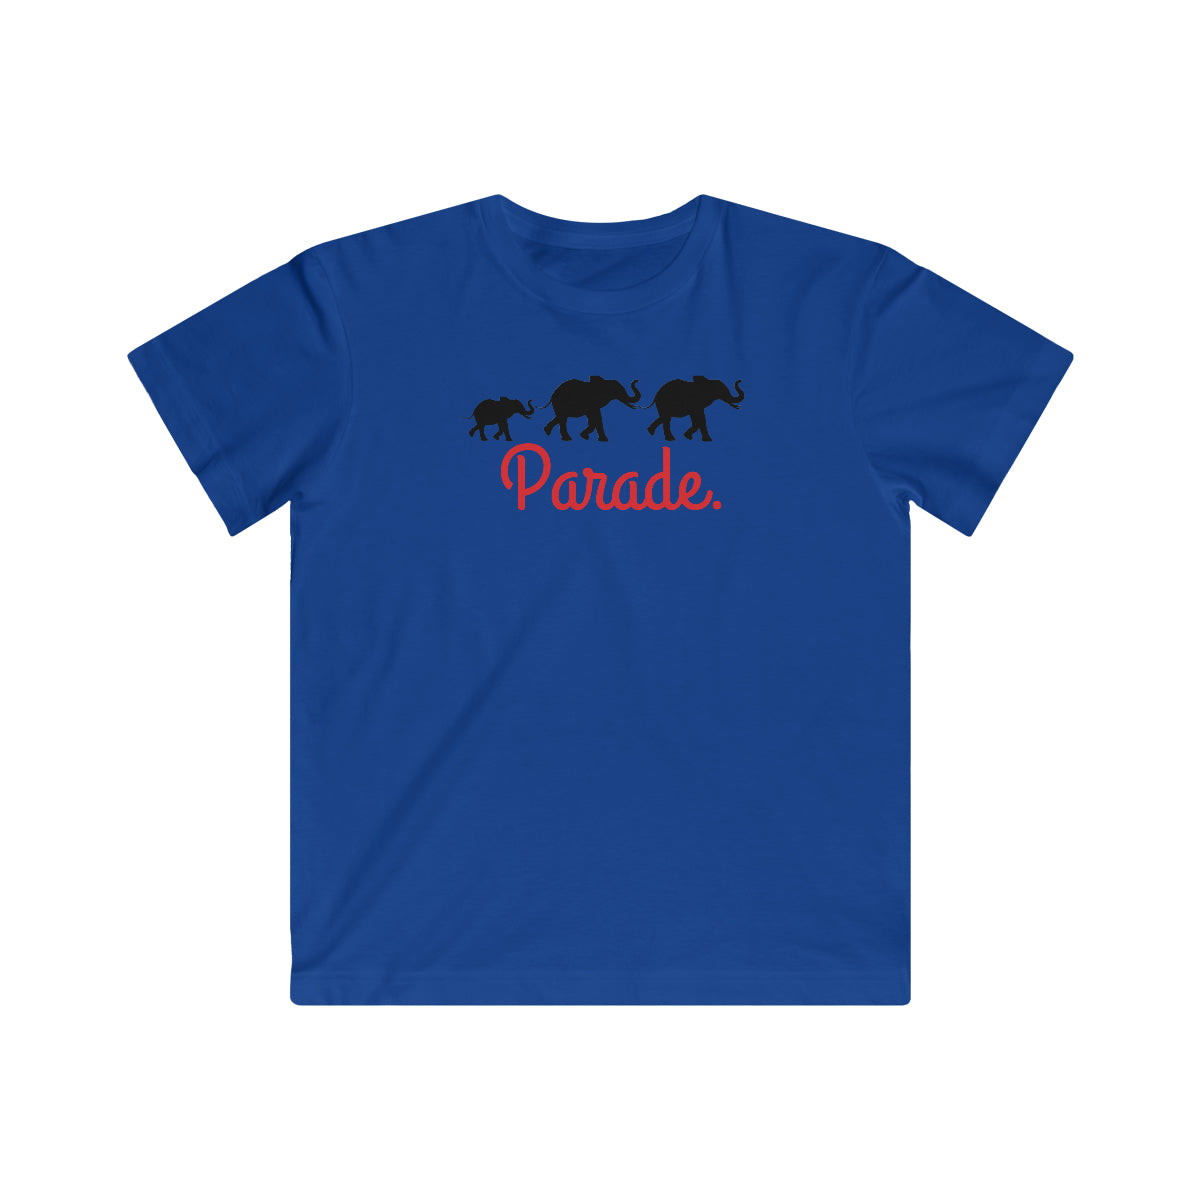 Parade of Elephants Kids' T-shirt